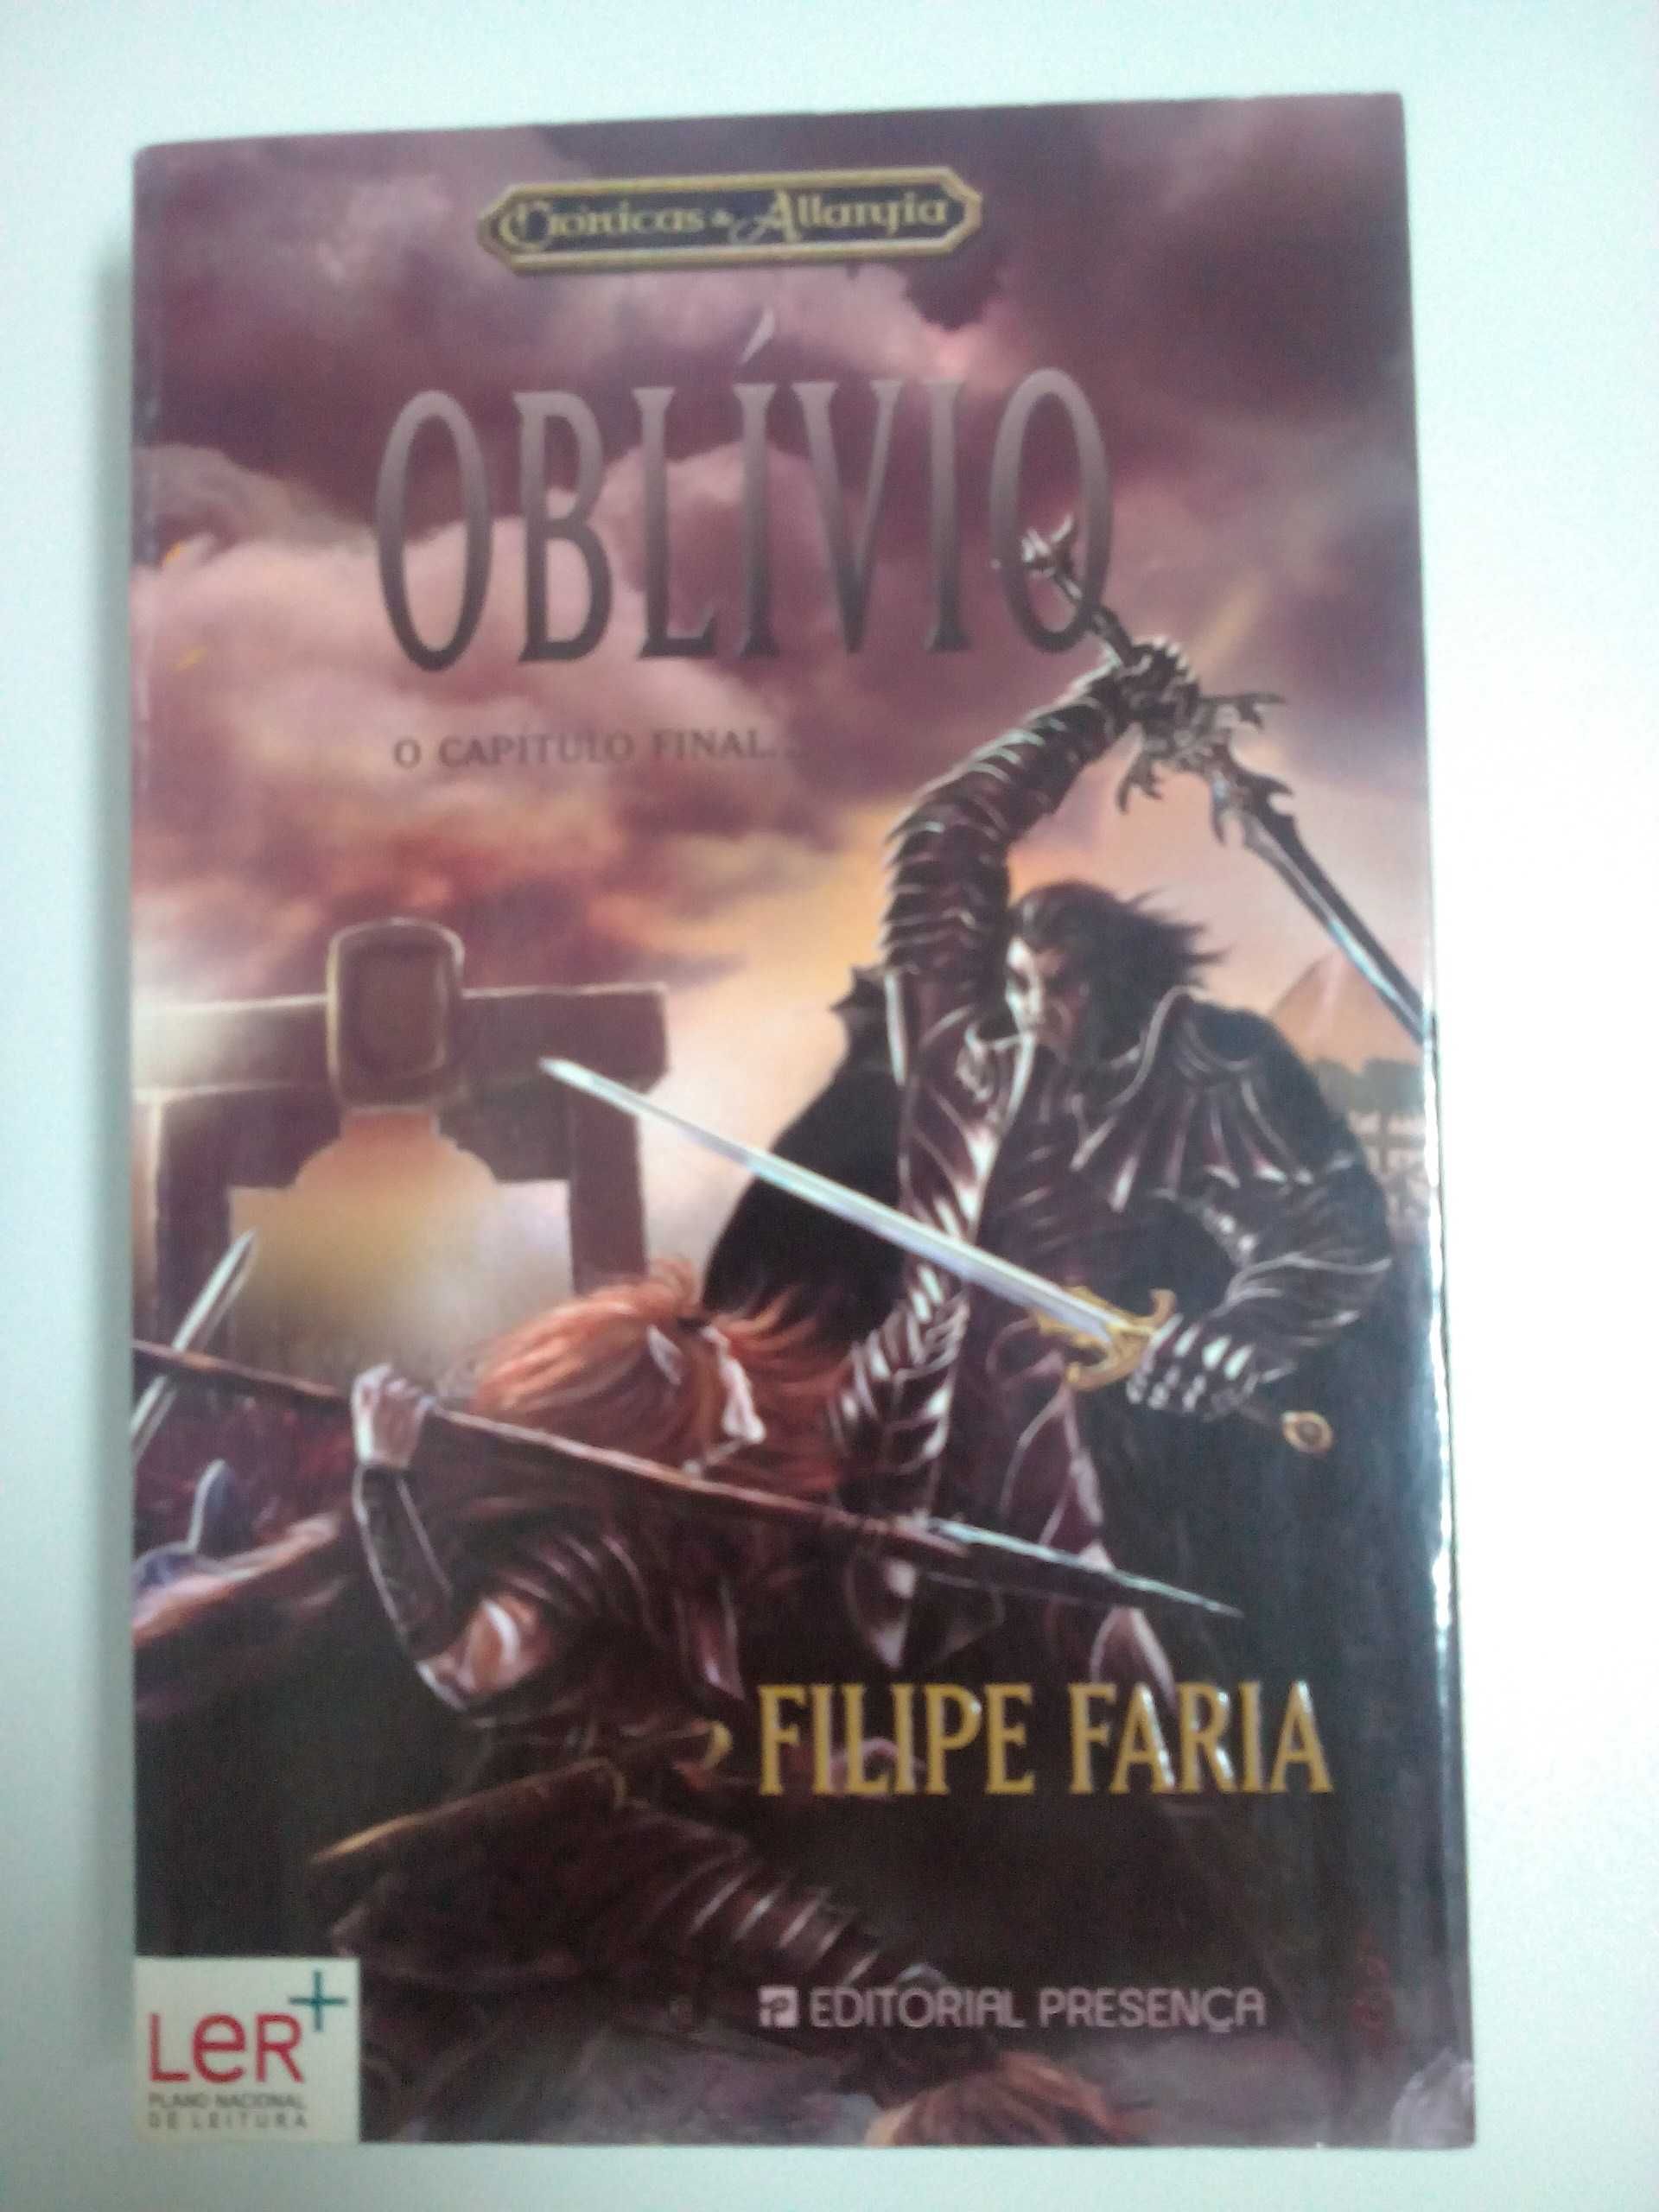 Cronicas de Allaryia - Filipe Faria